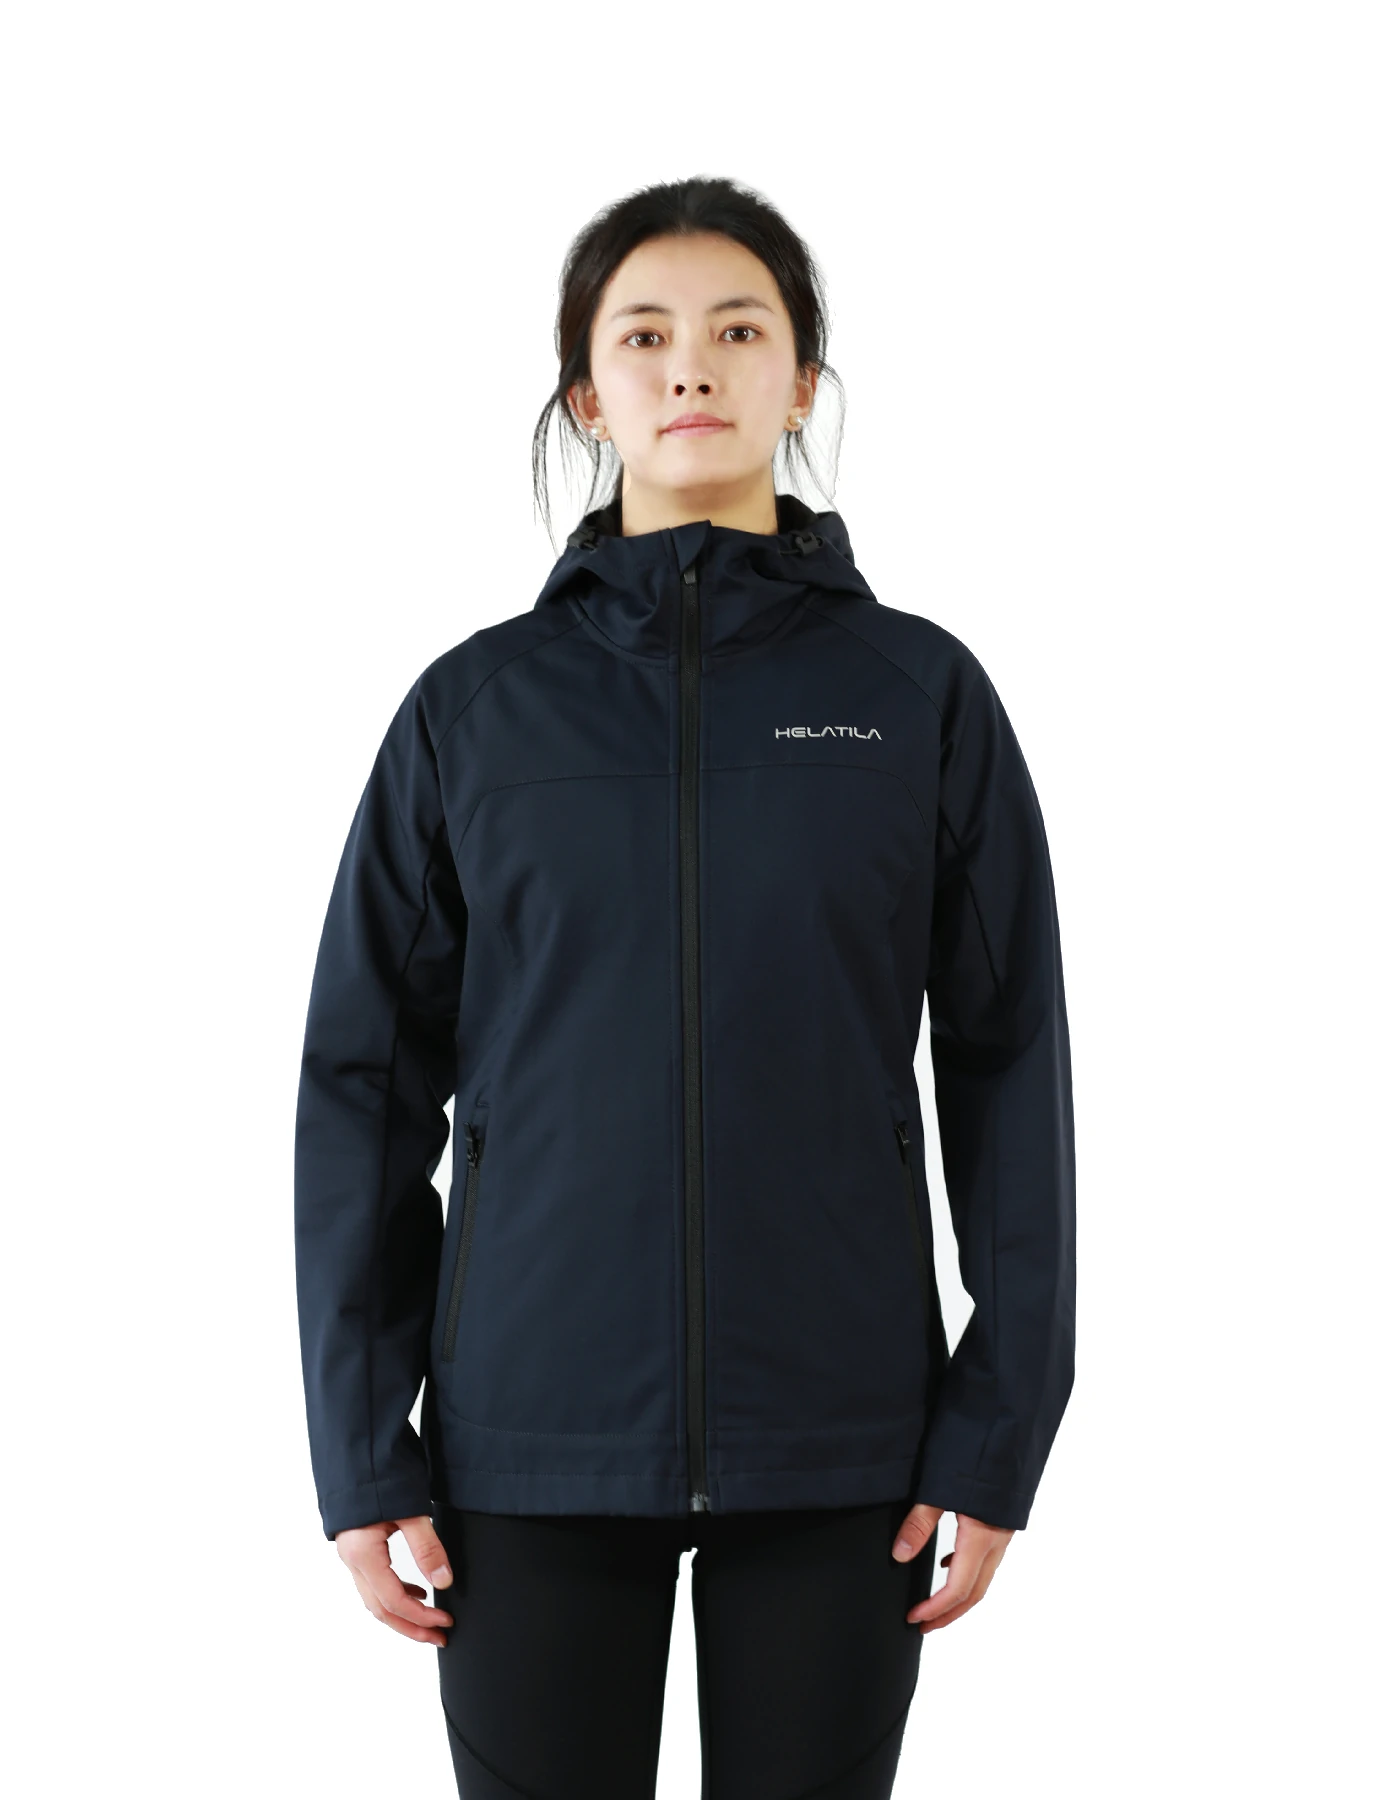 LA1006 womens softshell jacket